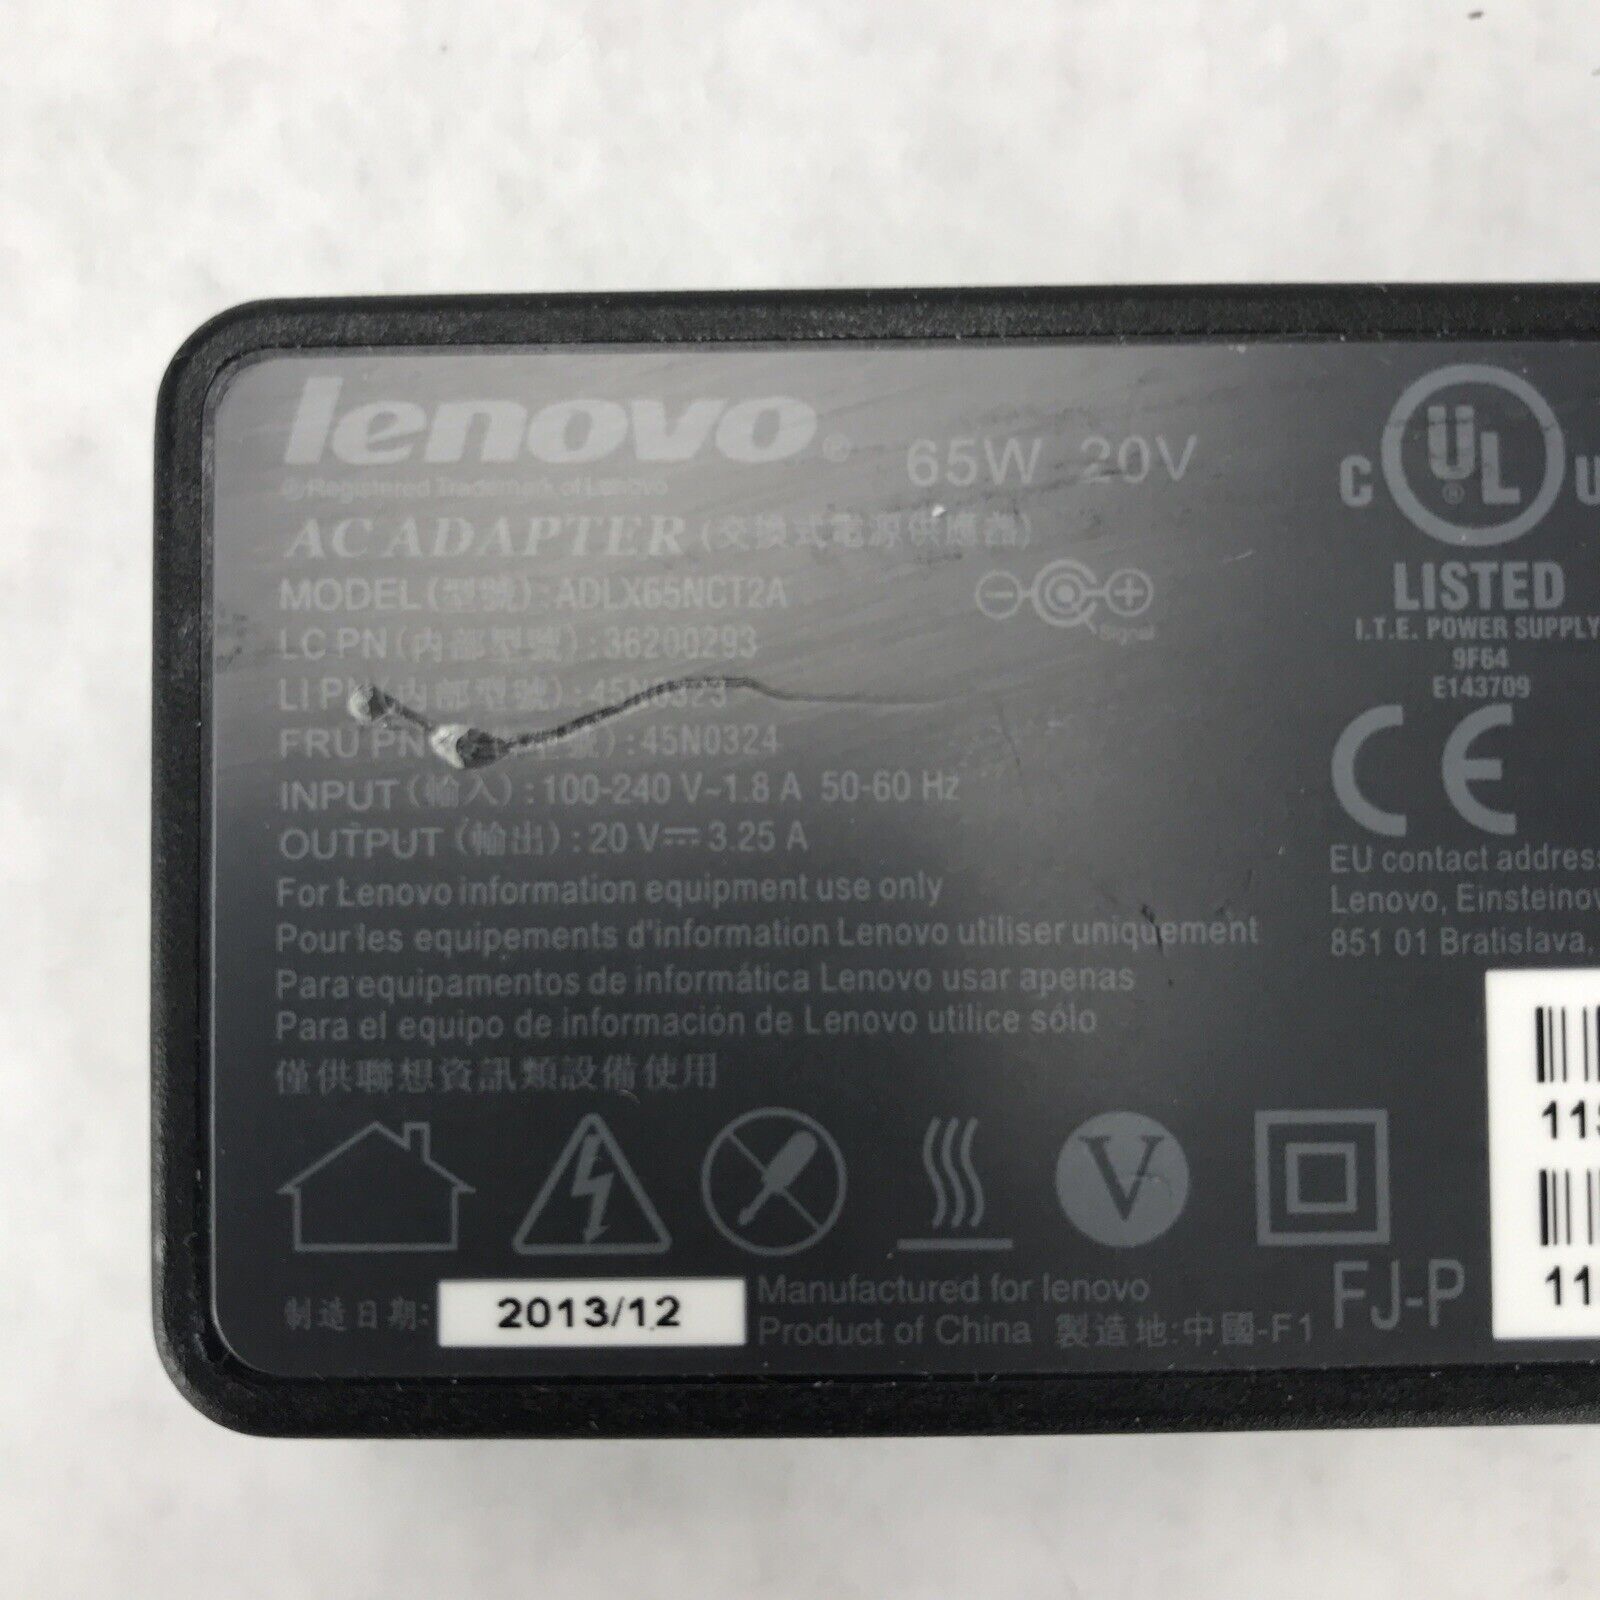 Lenovo ADLX65NCT2A AC Adapter 65W 20V 3.25A 45N0323 45N0324 36200293